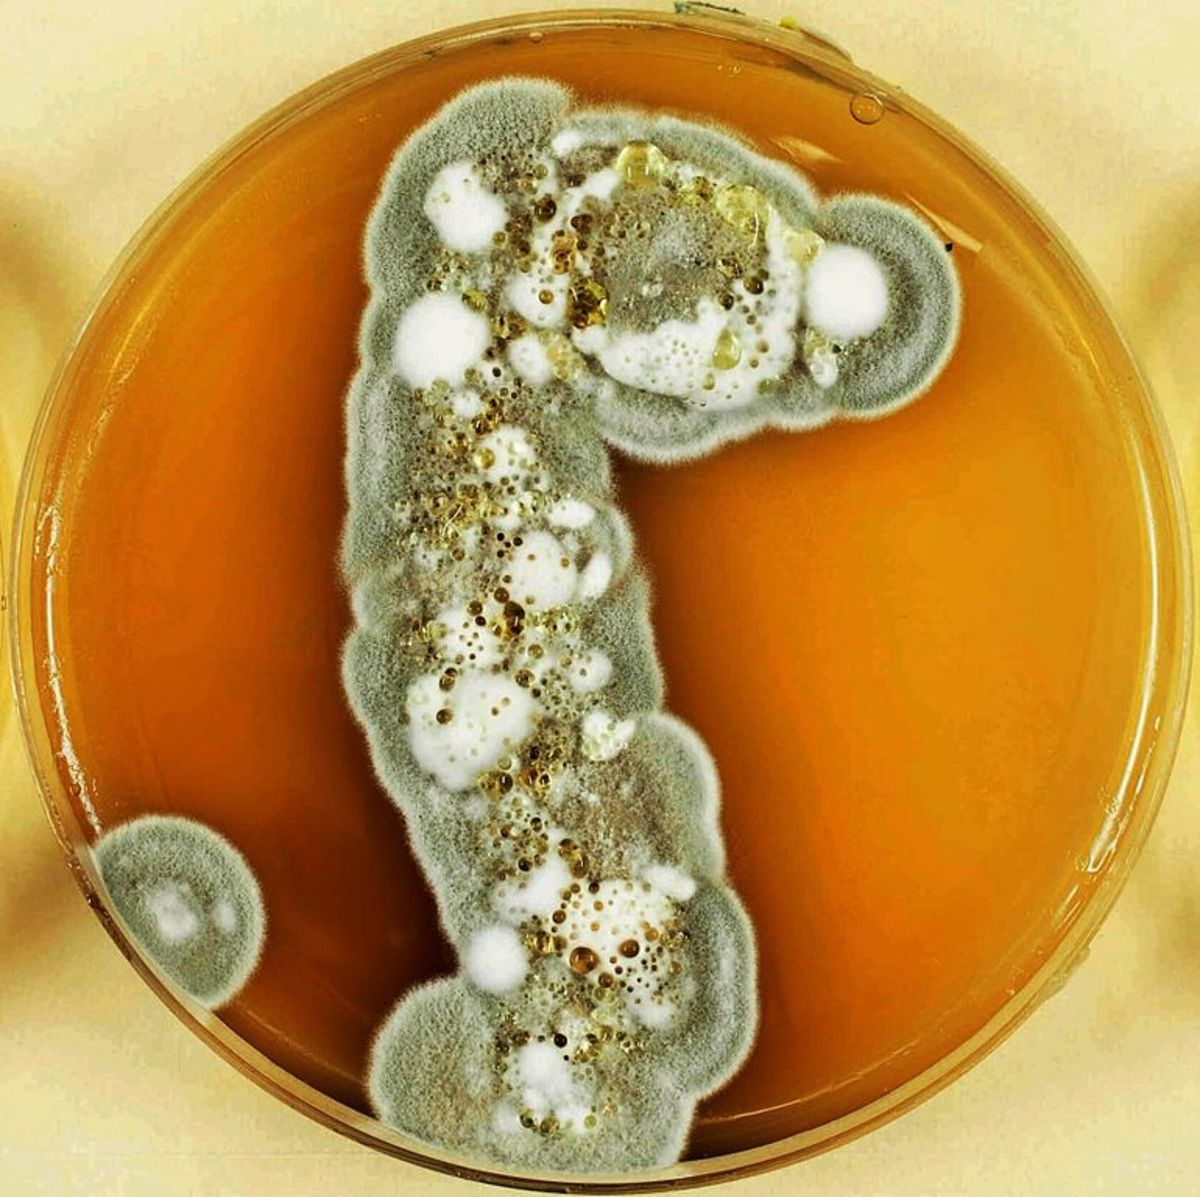 Pseudogymnoascus destructans culture in a Petri dish.  Photo by DB Rudabaugh, courtesy Wikimedia Commons.